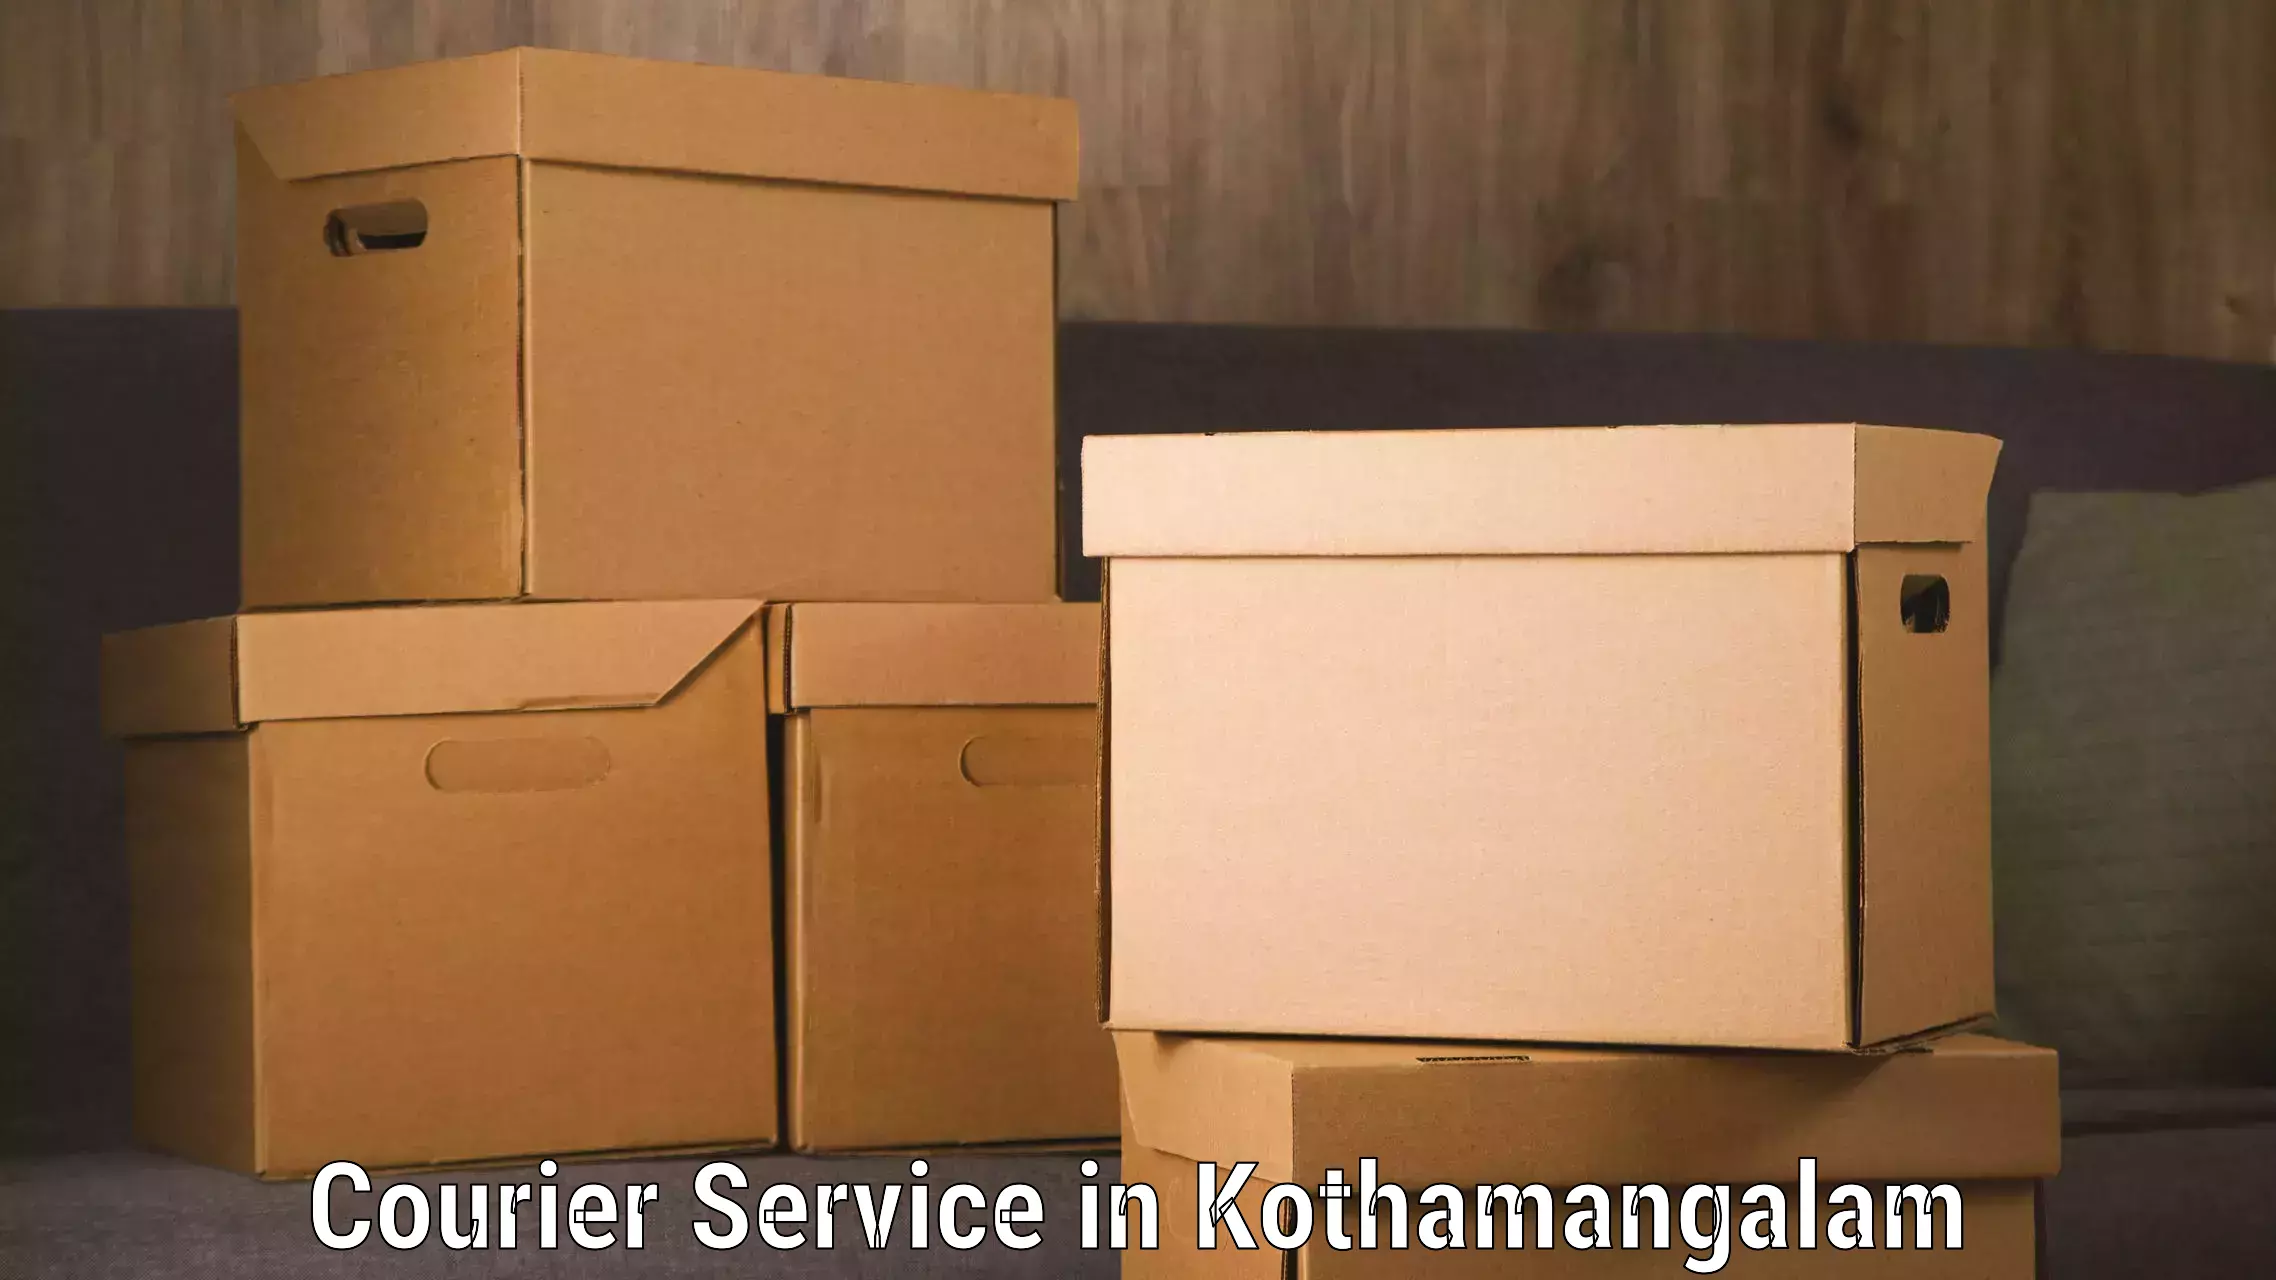 Express postal services in Kothamangalam